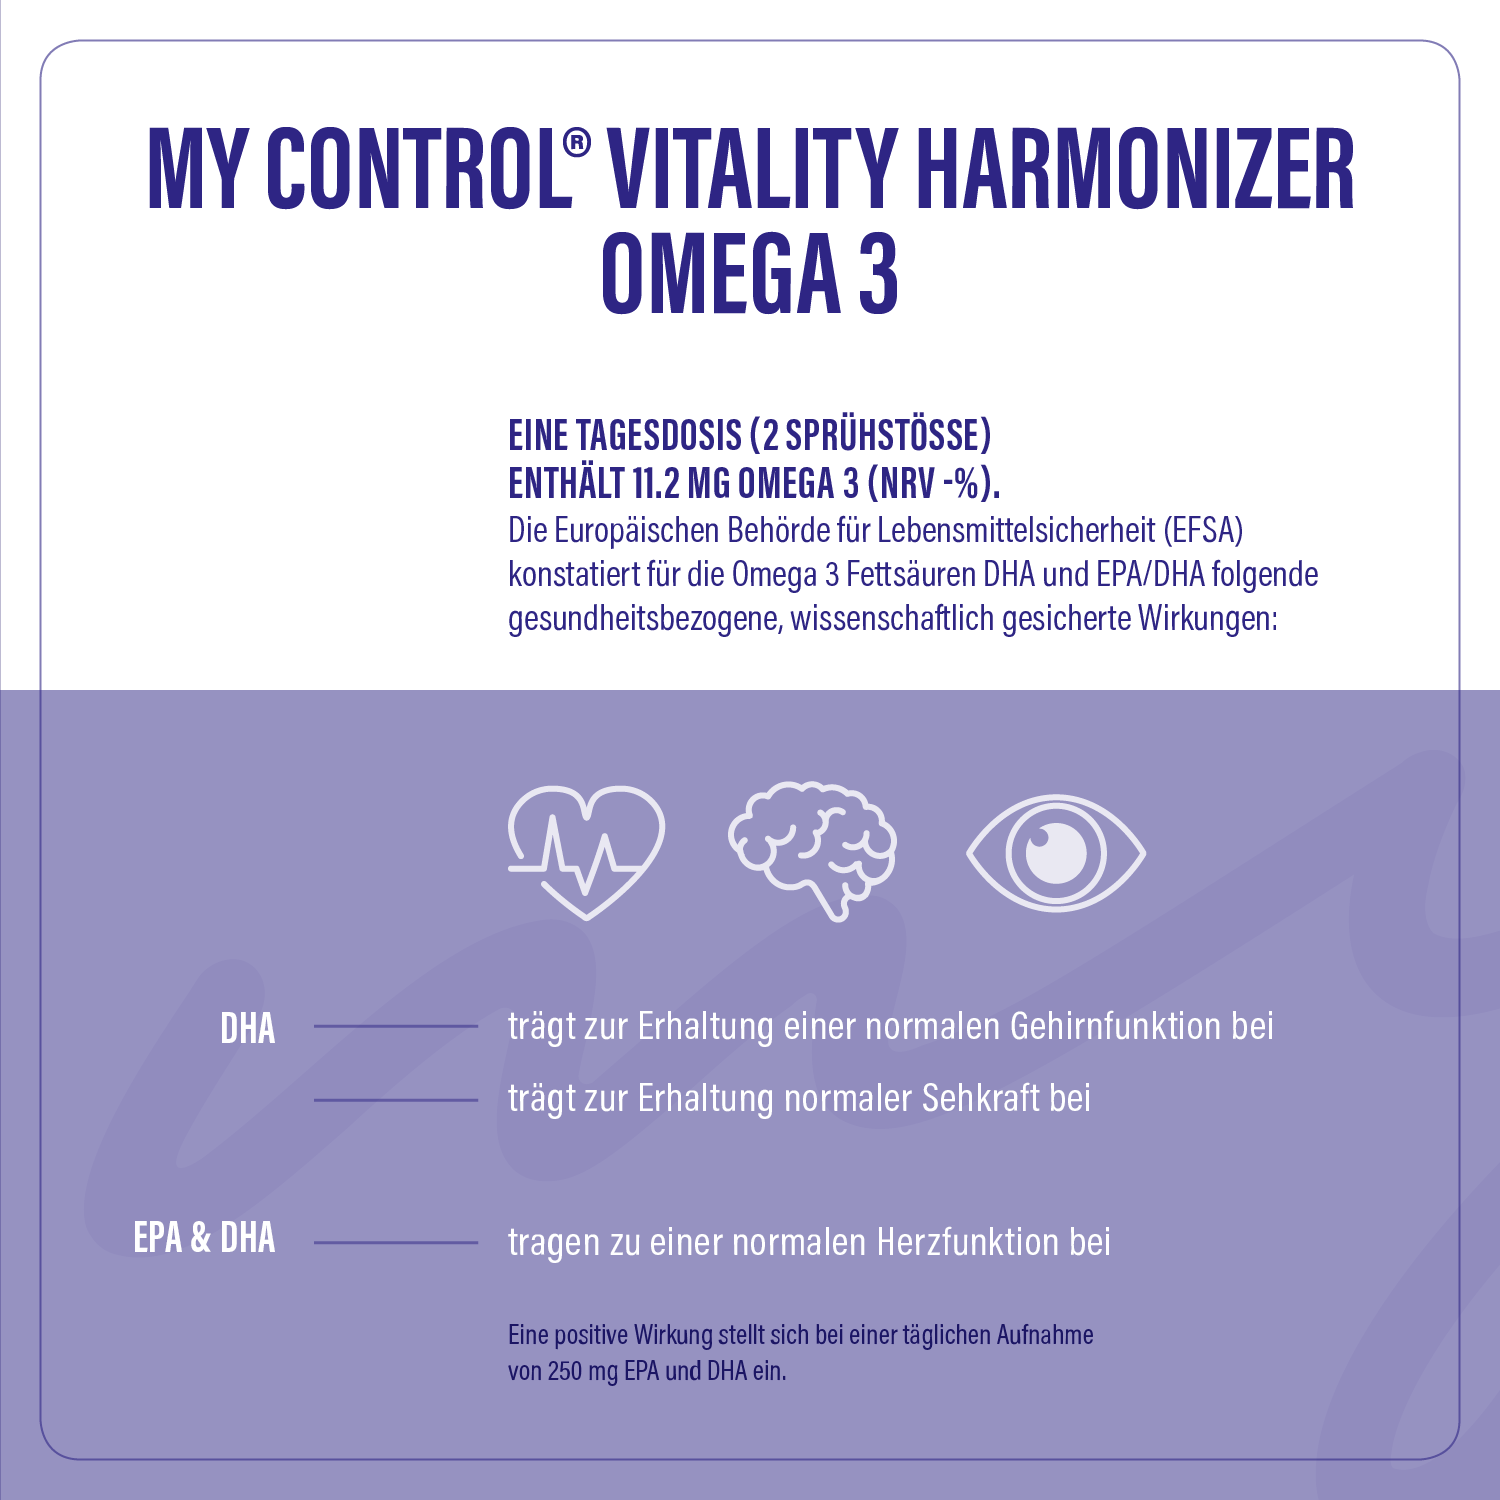 Harmonizer Omega-3 Tagesdosis und Health Claims